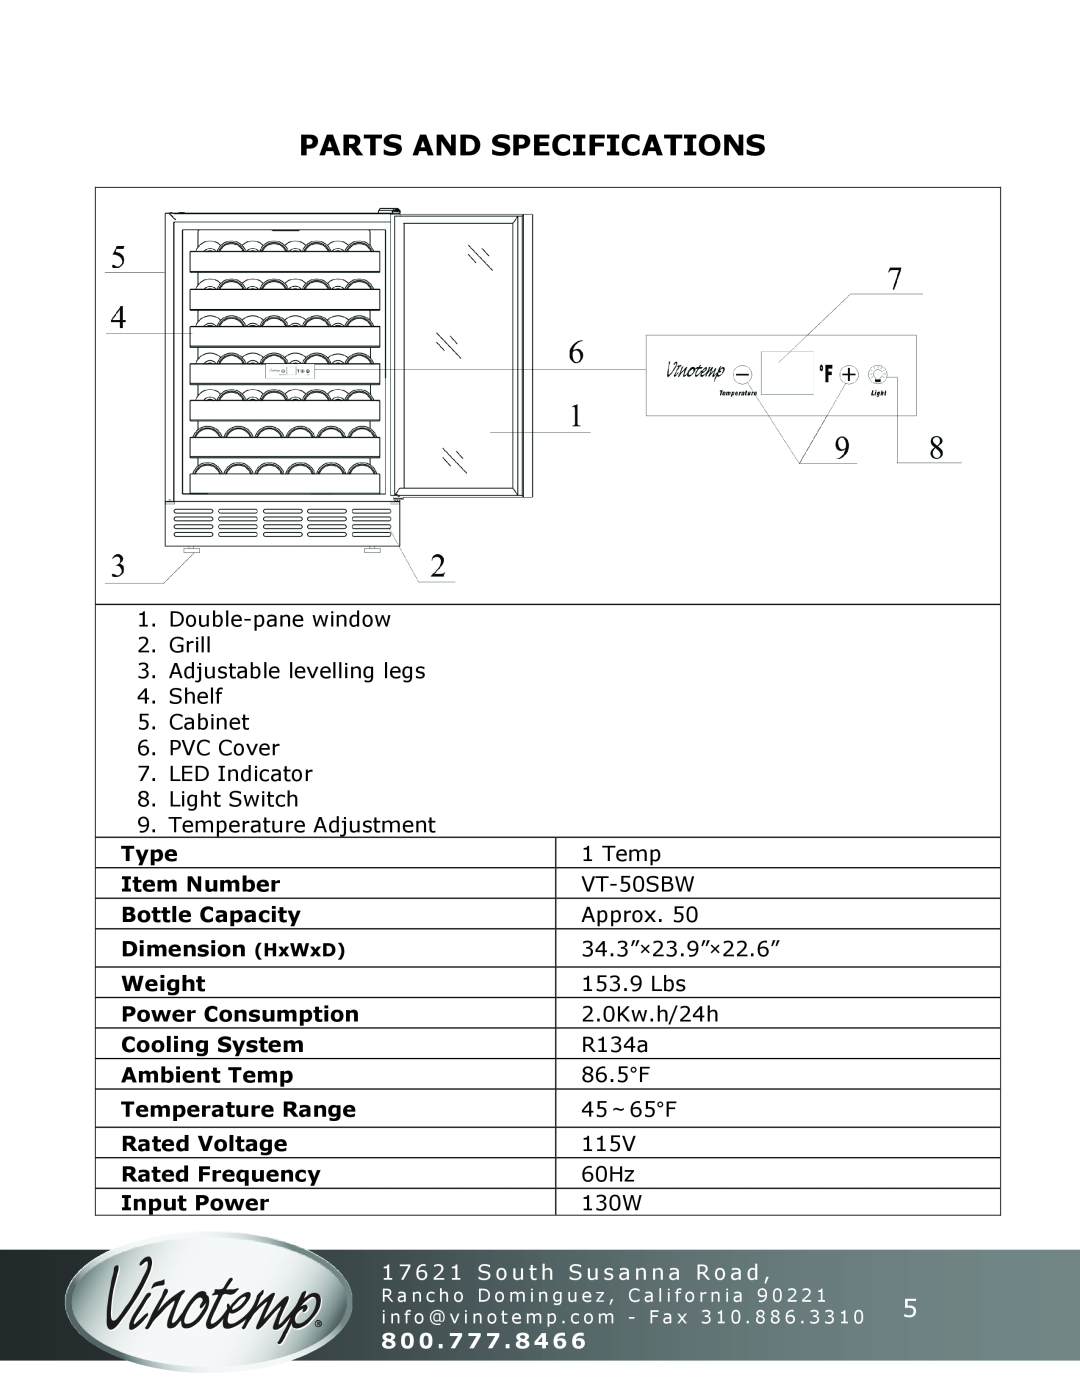 Vinotemp VT-50SBW instruction manual Parts And Specifications, 1 7 6 2 1 S o u t h S u s a n n a R o a d, 800 